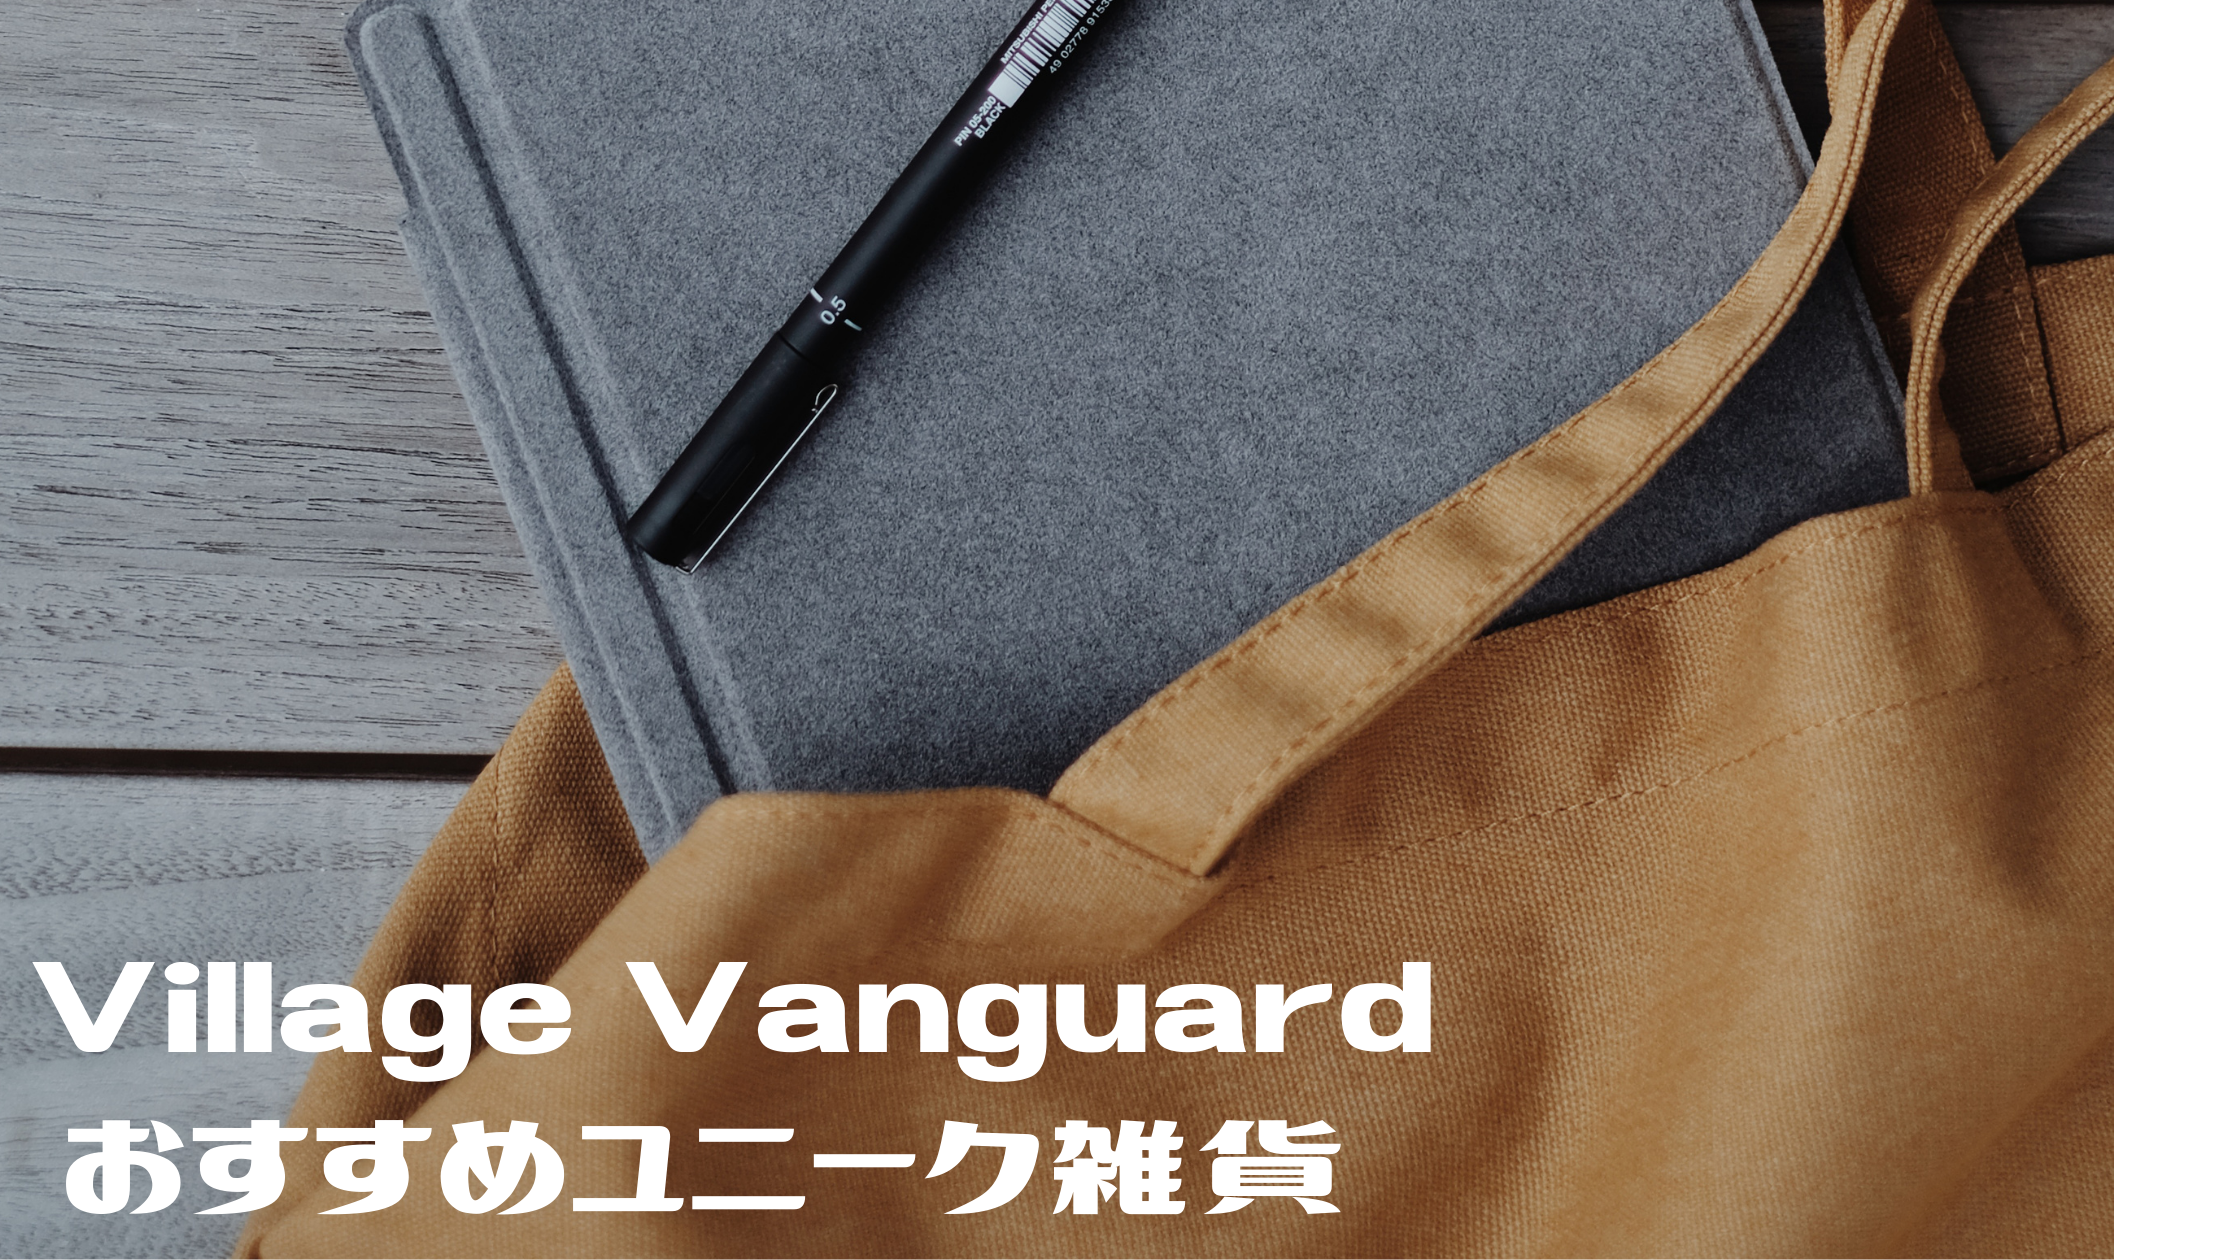 【Village Vanguard】おもしろ雑貨ヴィレヴァンのおすすめアイテム『広辞苑アイテム』『岩波書店アイテム』『ゆる袴』